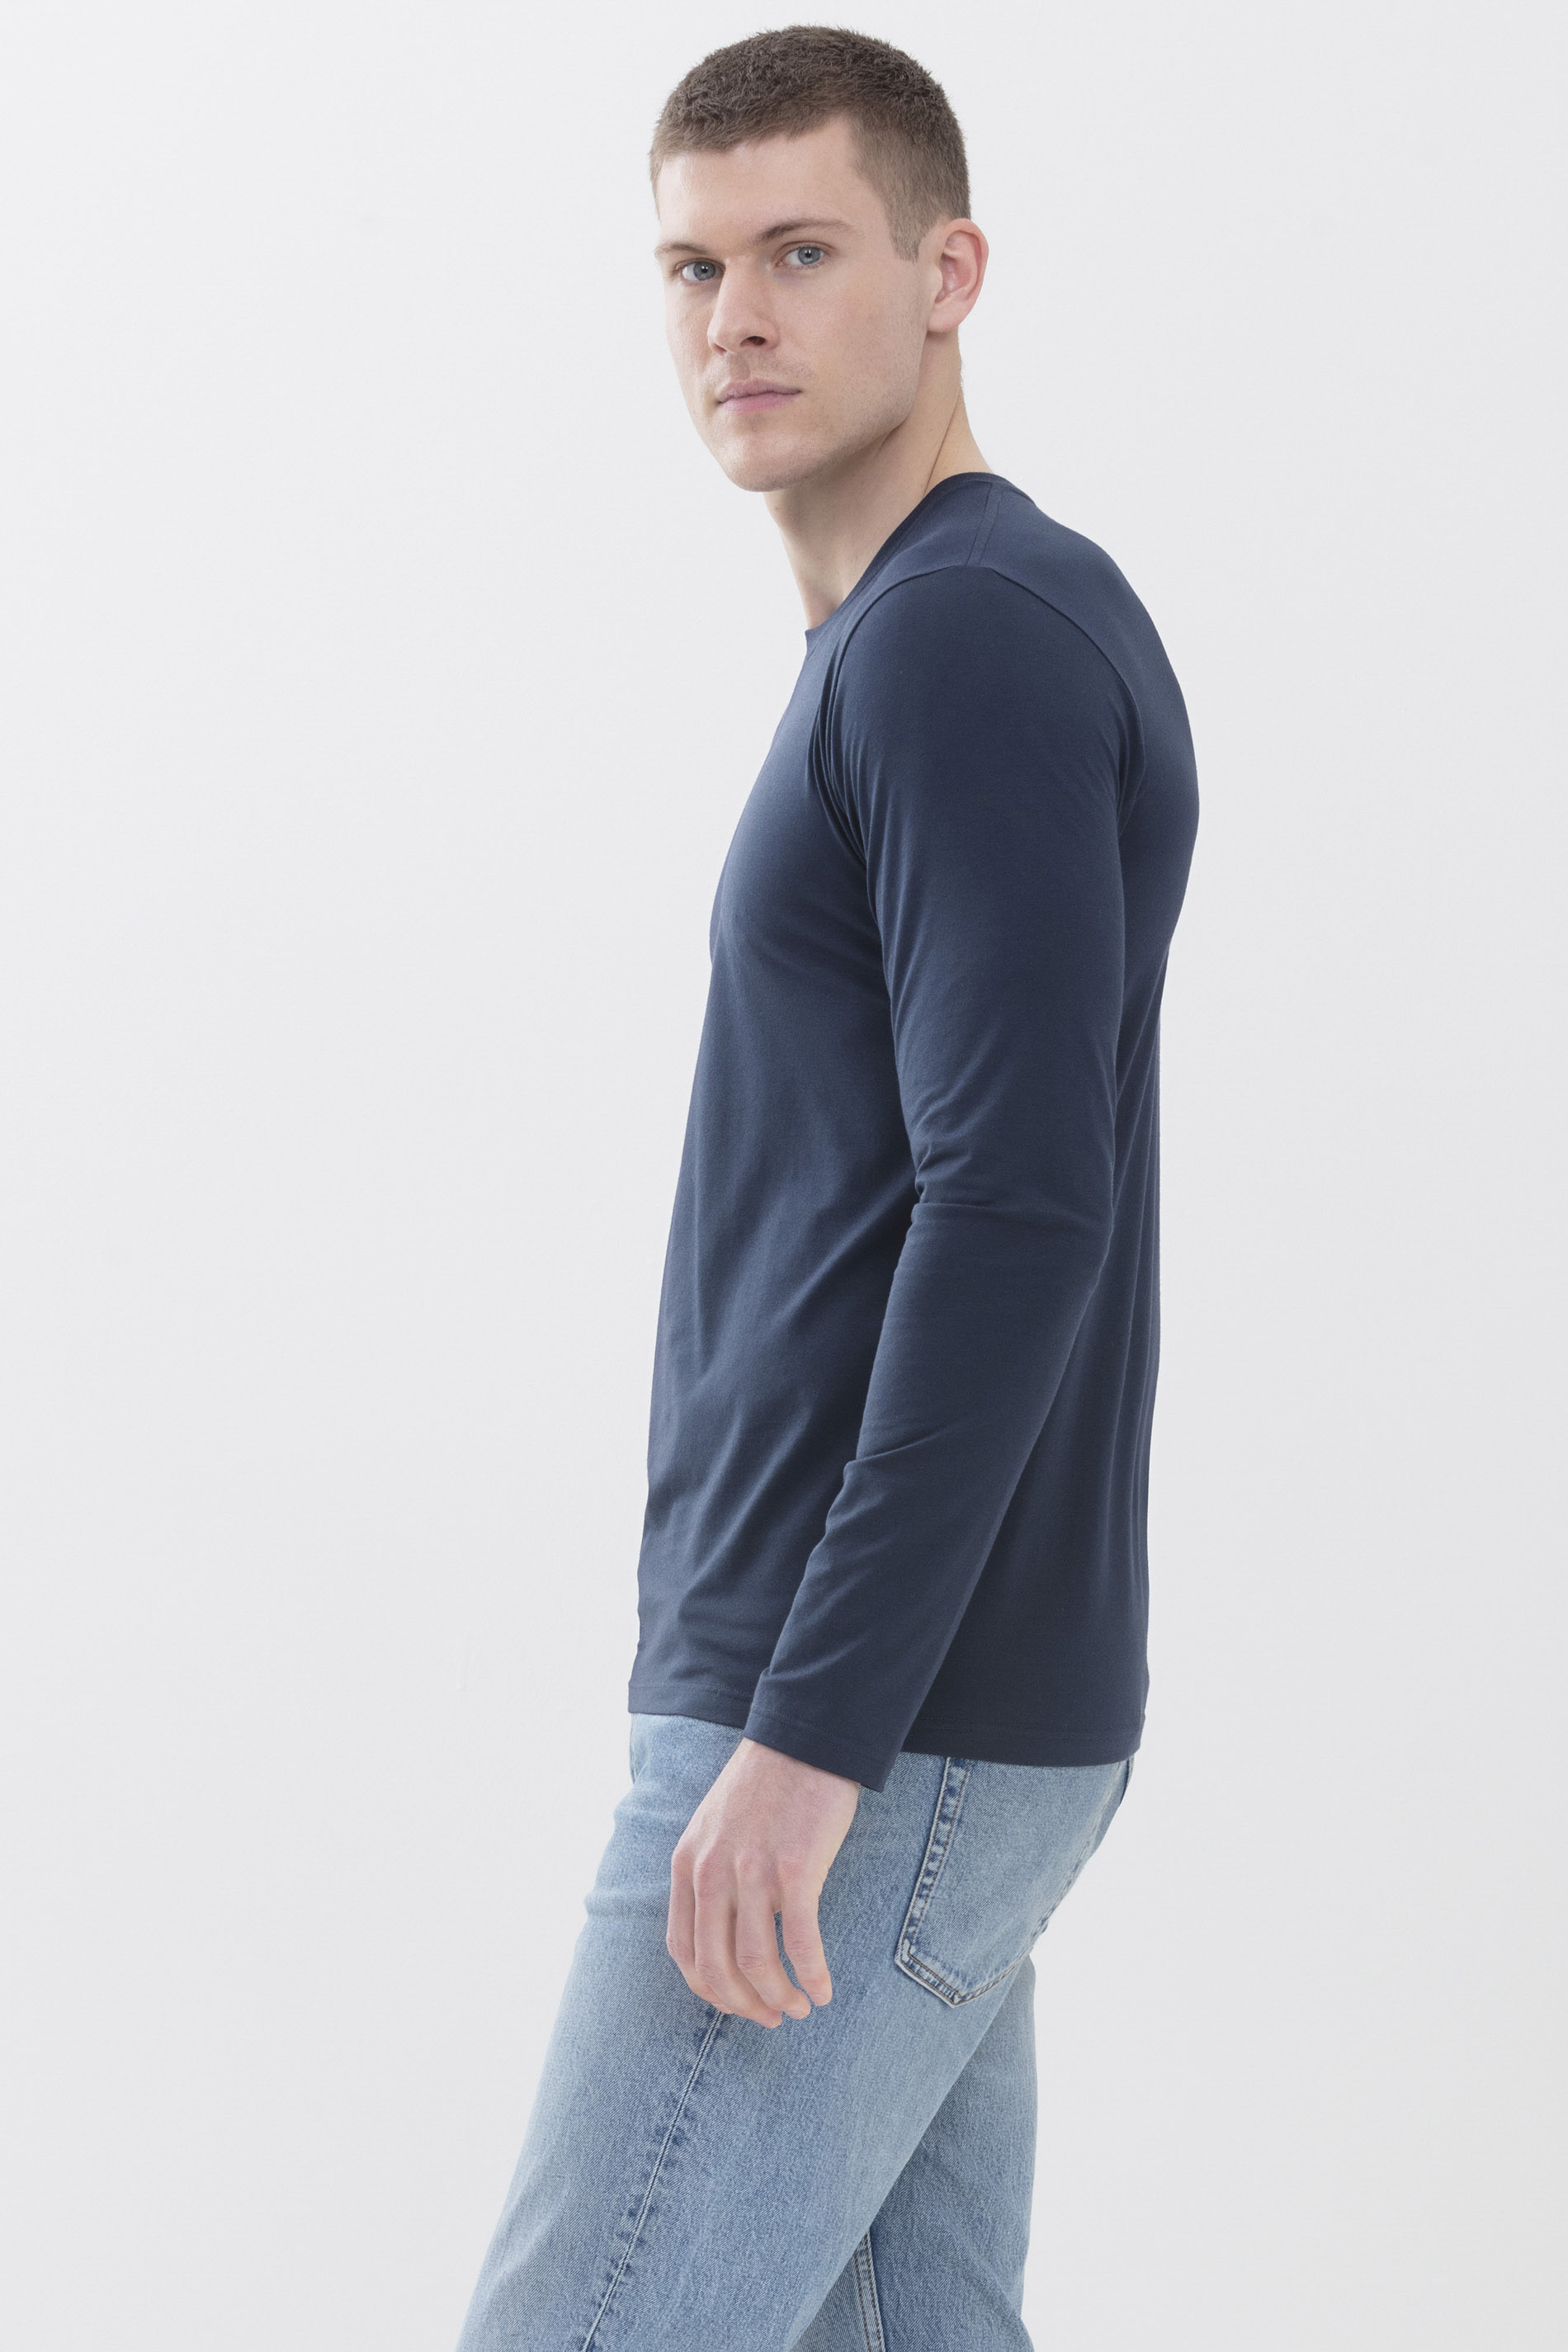 Hybride T-shirt | Lange mouwen Yacht Blue Serie Hybrid T-Shirt Detailweergave 02 | mey®